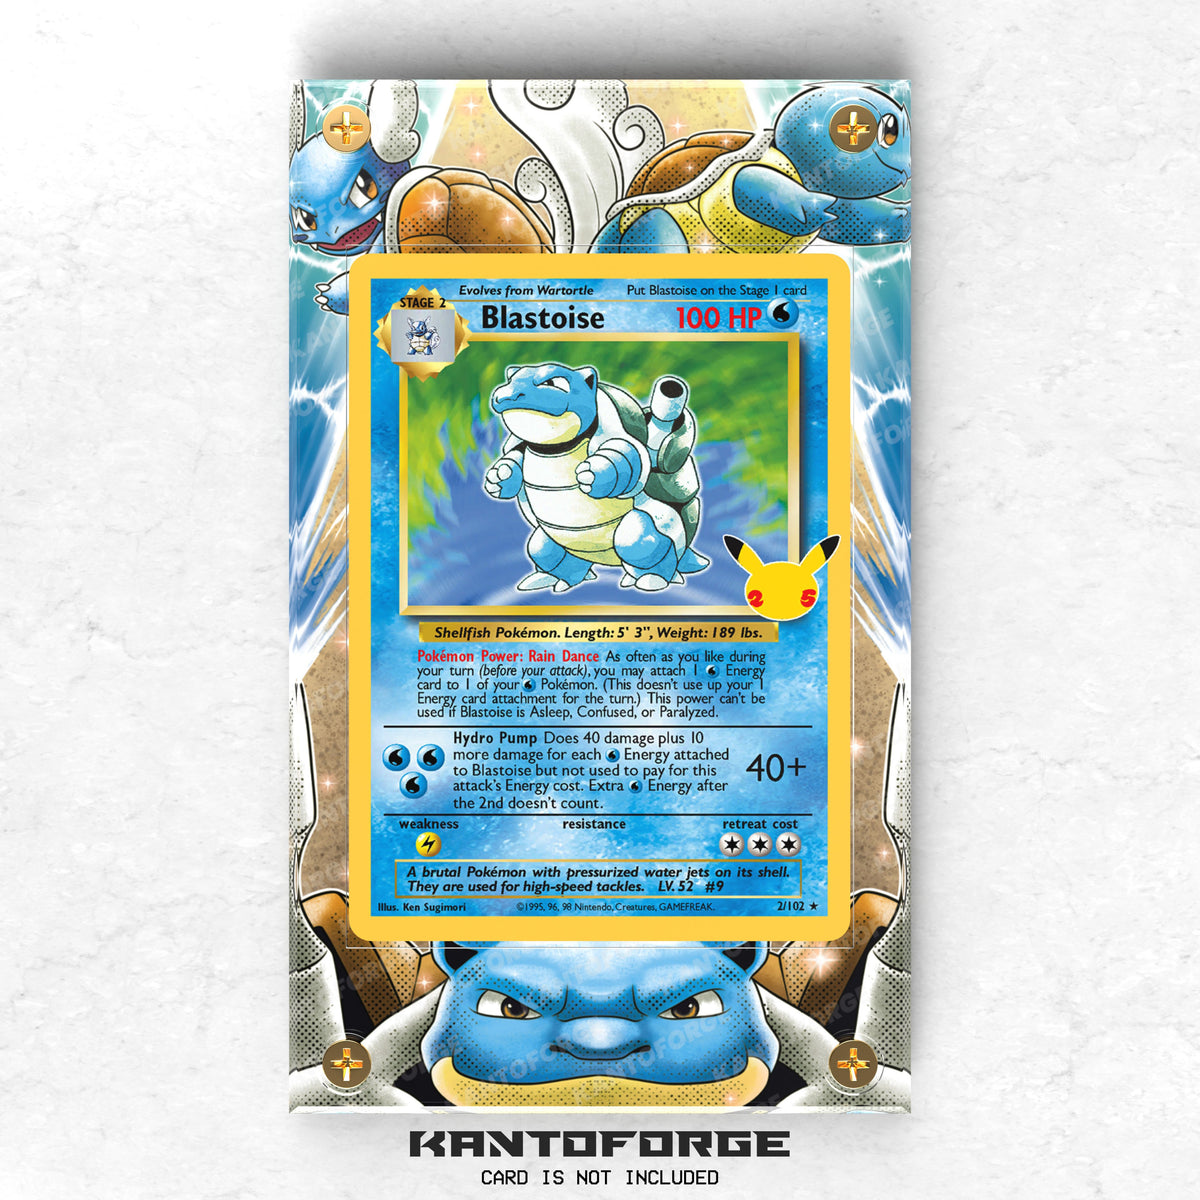 Blastoise (カメックス) Base Set - Pokémon Extended Artwork Protective Card Display Case